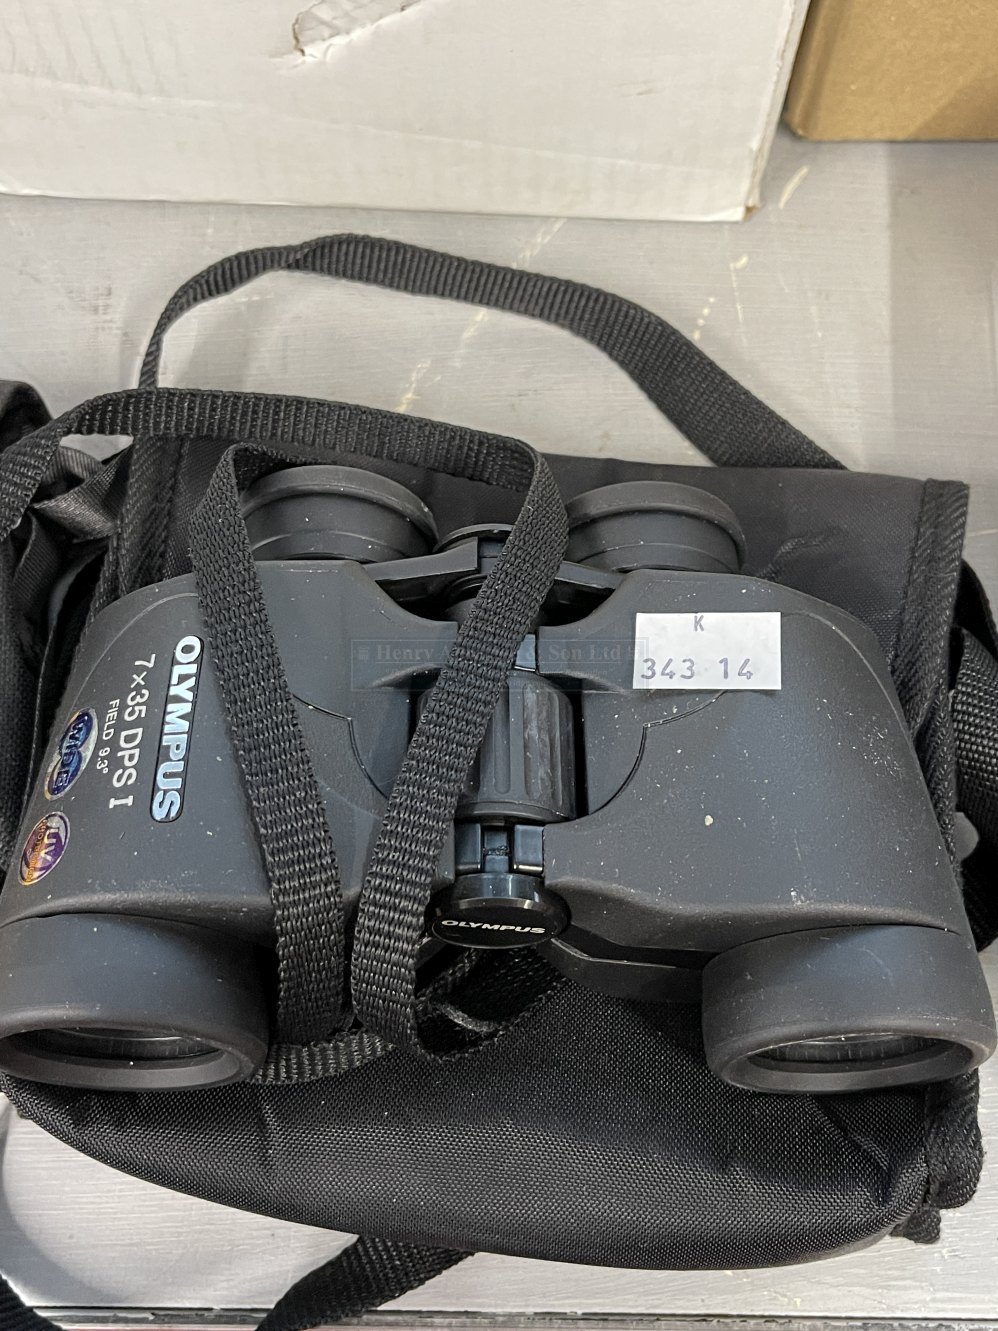 Optical Instruments: Binoculars, Olympus DPS I 7x35 in bag, plus a pair of Clubman Watersport - Image 2 of 2